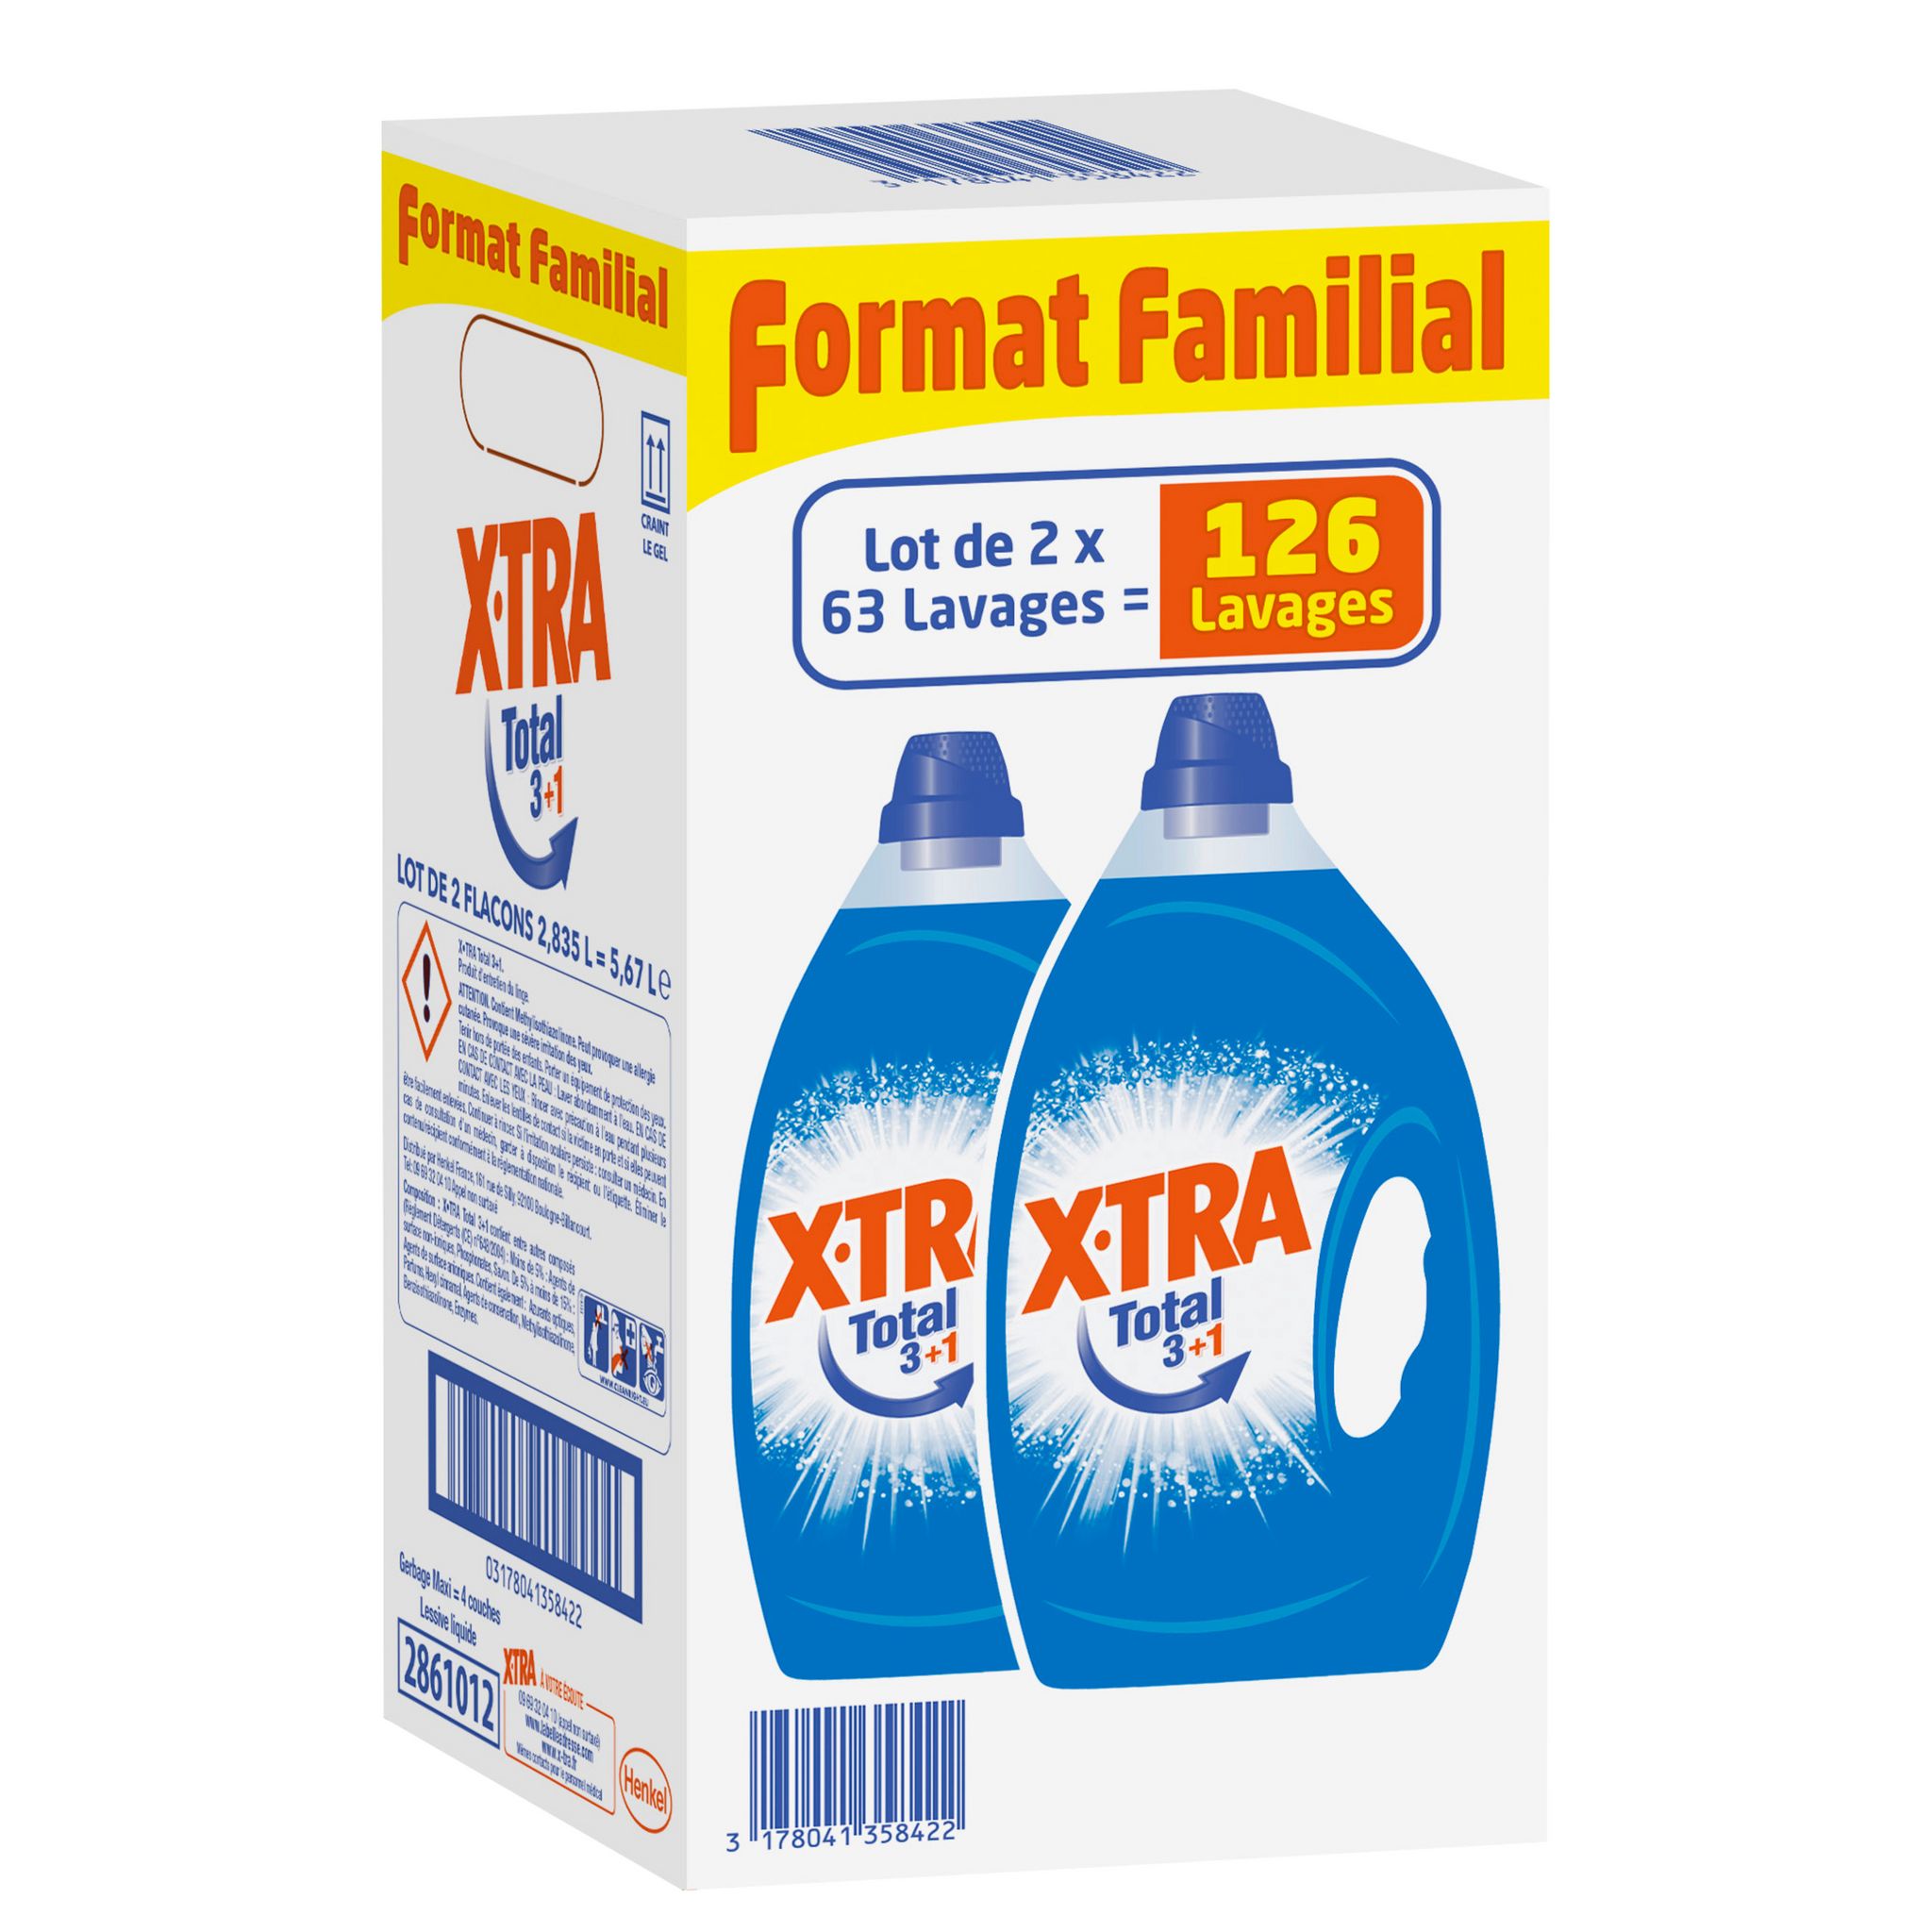 Lessive liquide XTRA disponible en différents parfums à prix